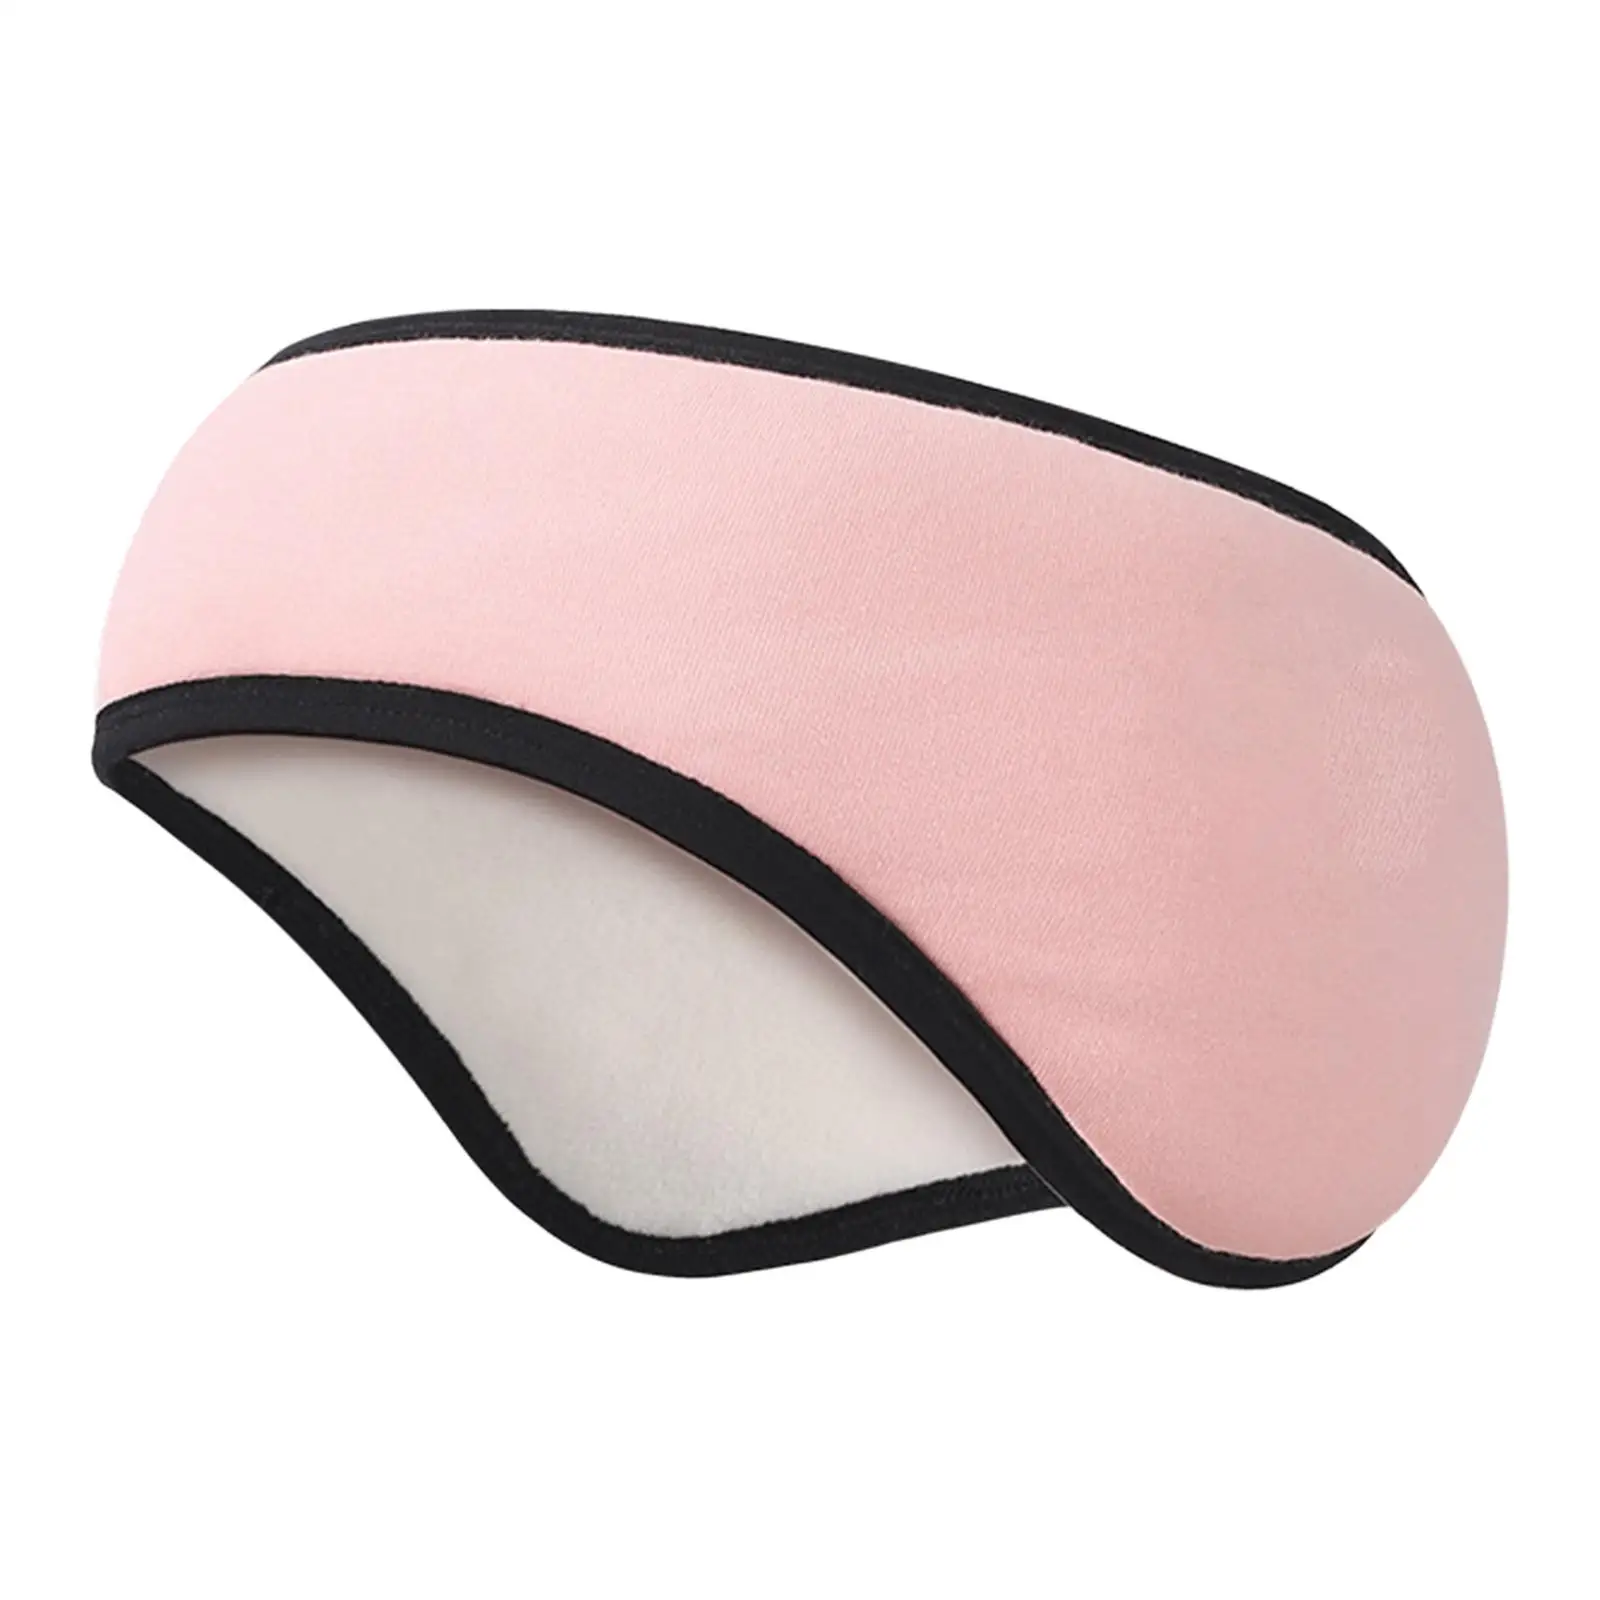 Winter Earmuffs for Women Windproof Comfortable Headscarf Hair Band Ear Warmers Headband Ear Muffs for Outdoors Cycling Riding